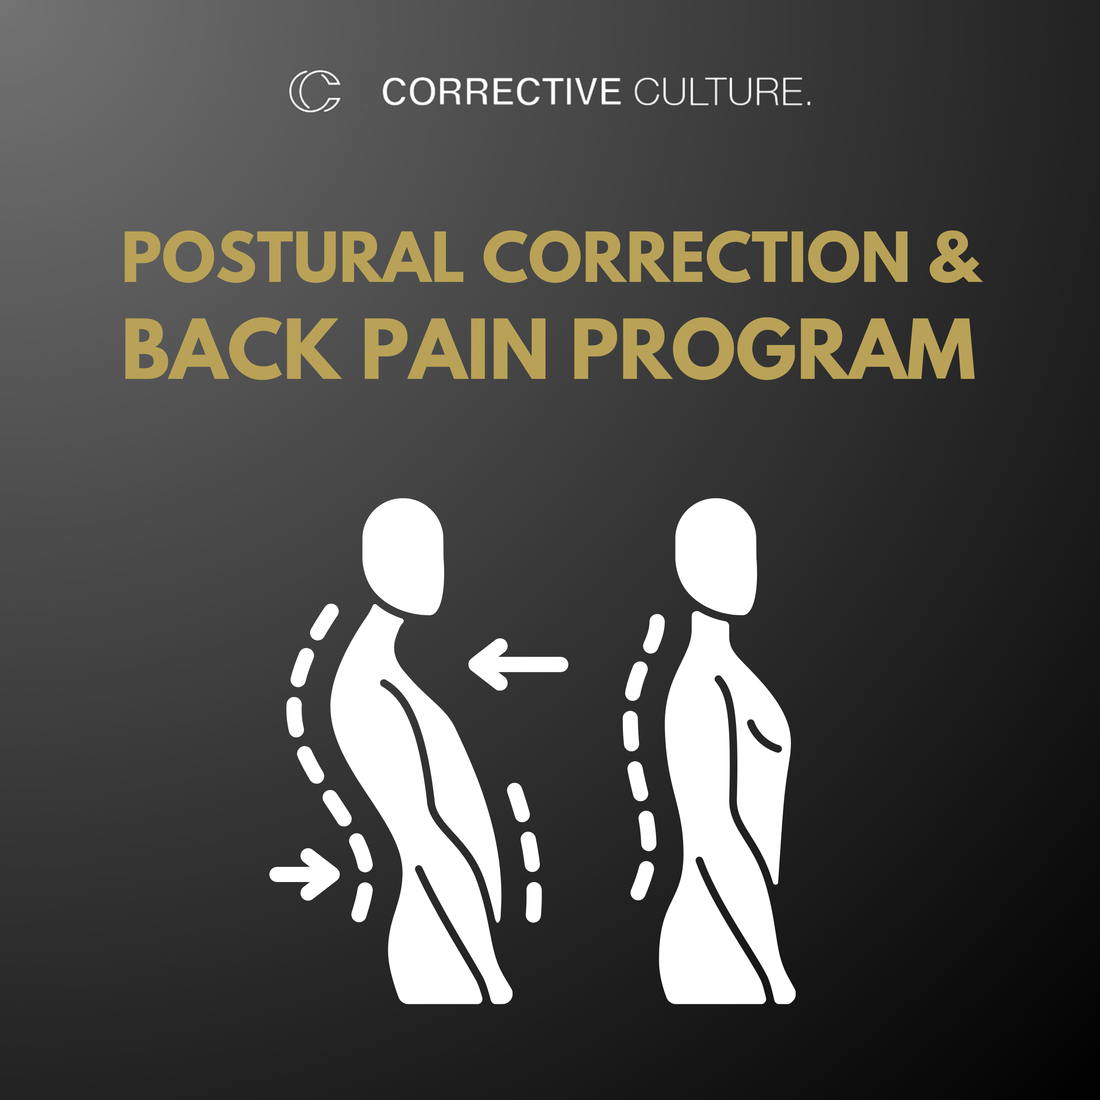 Posture Correction & Back Pain Program